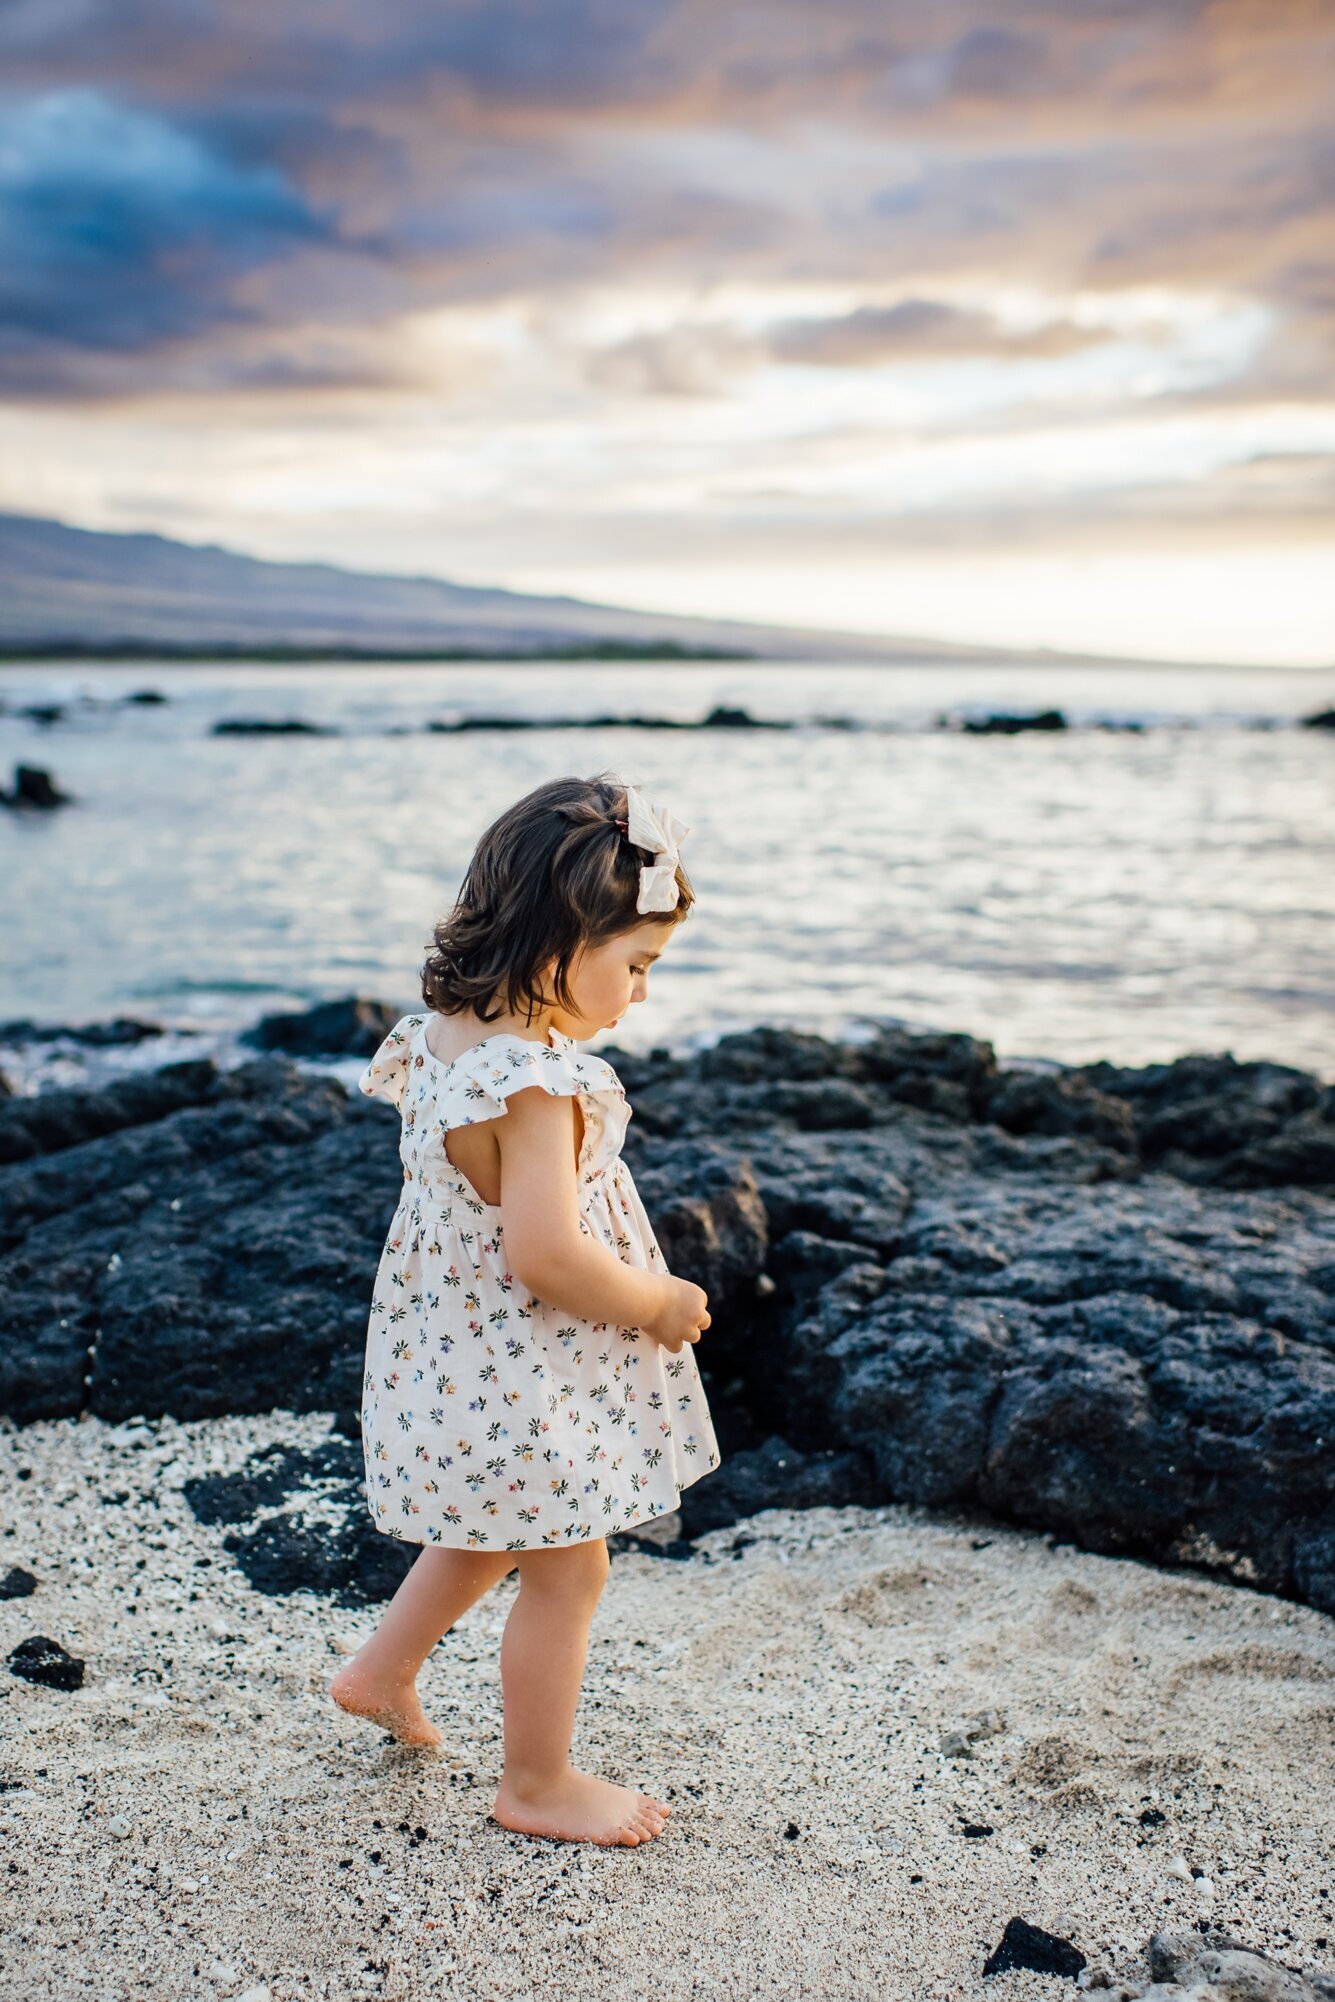 little girl walking on the beach at sunset